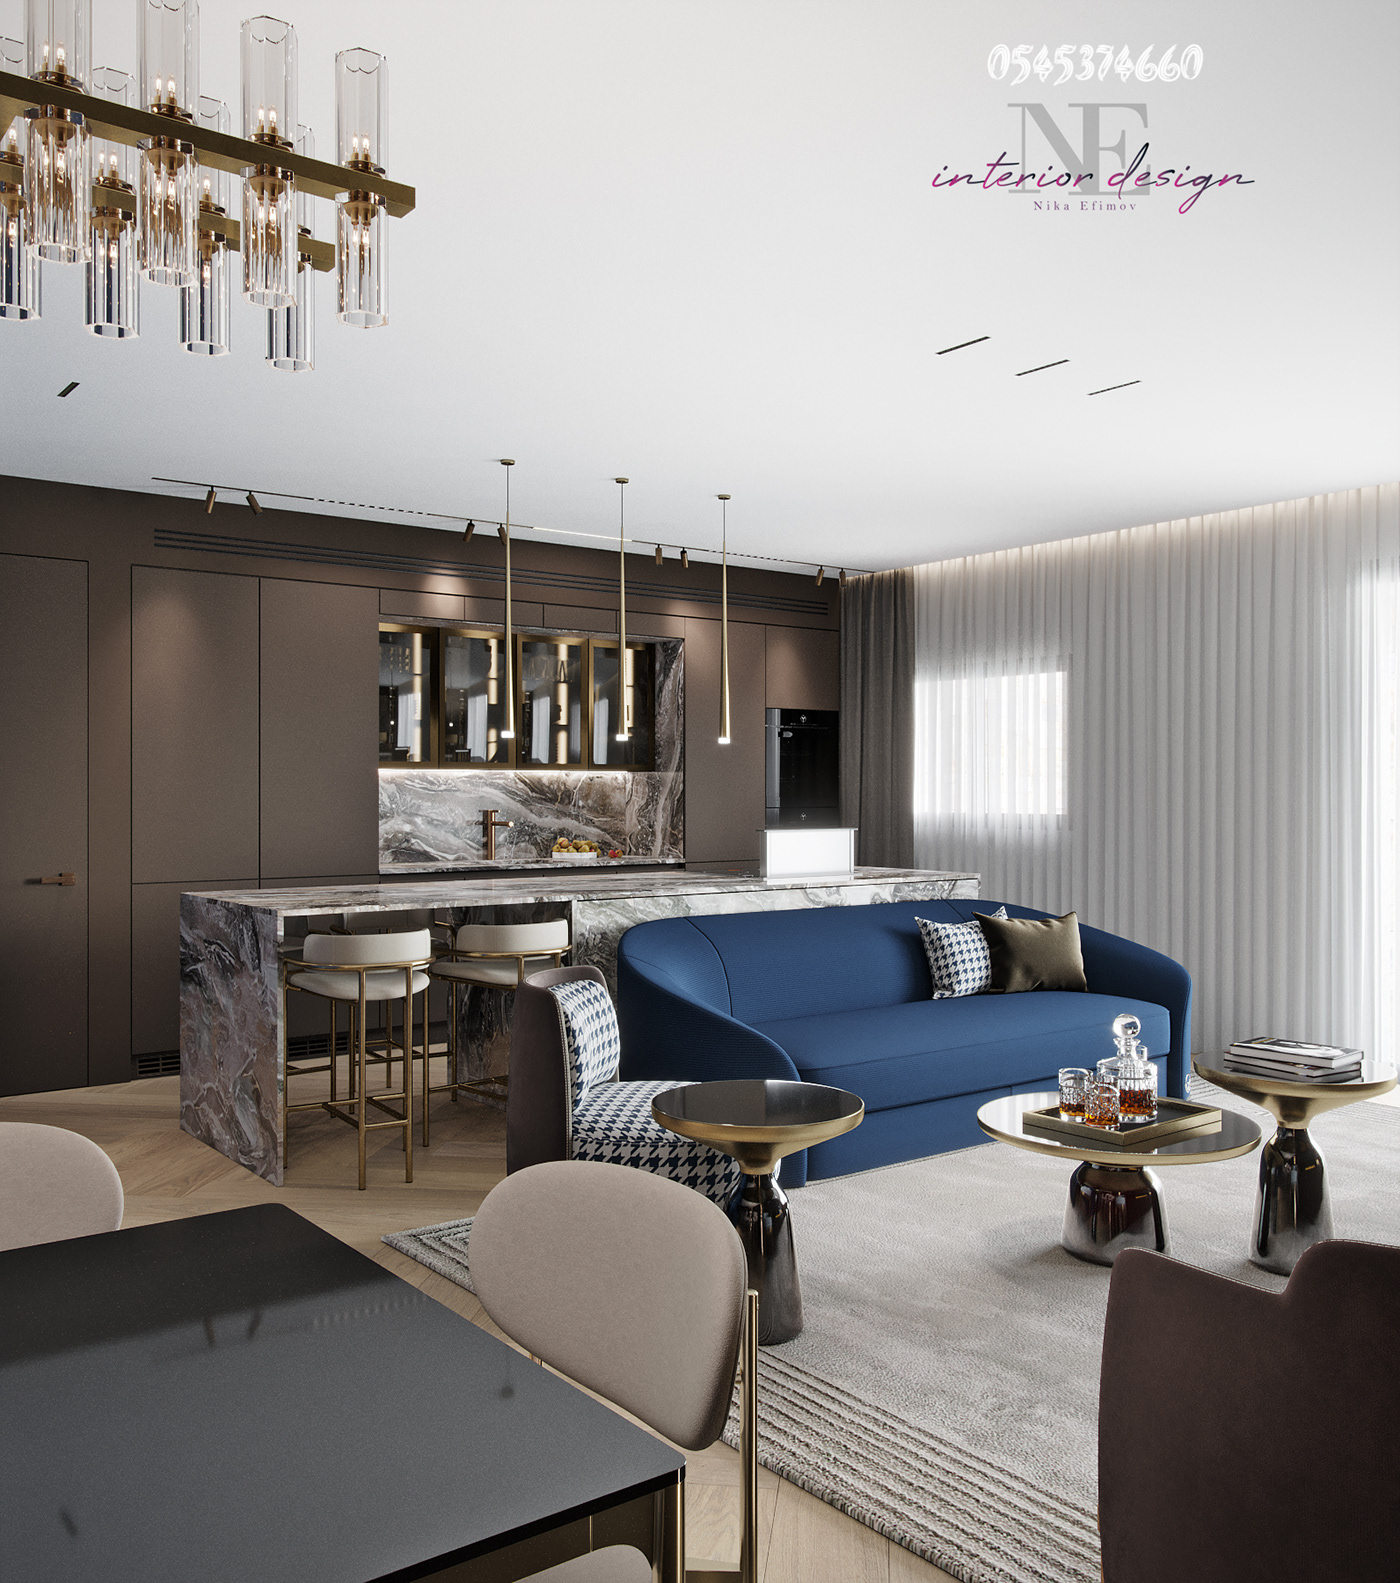 #living room #interiordesign #fireplace #trends2021 #kitchendesign #kitchen